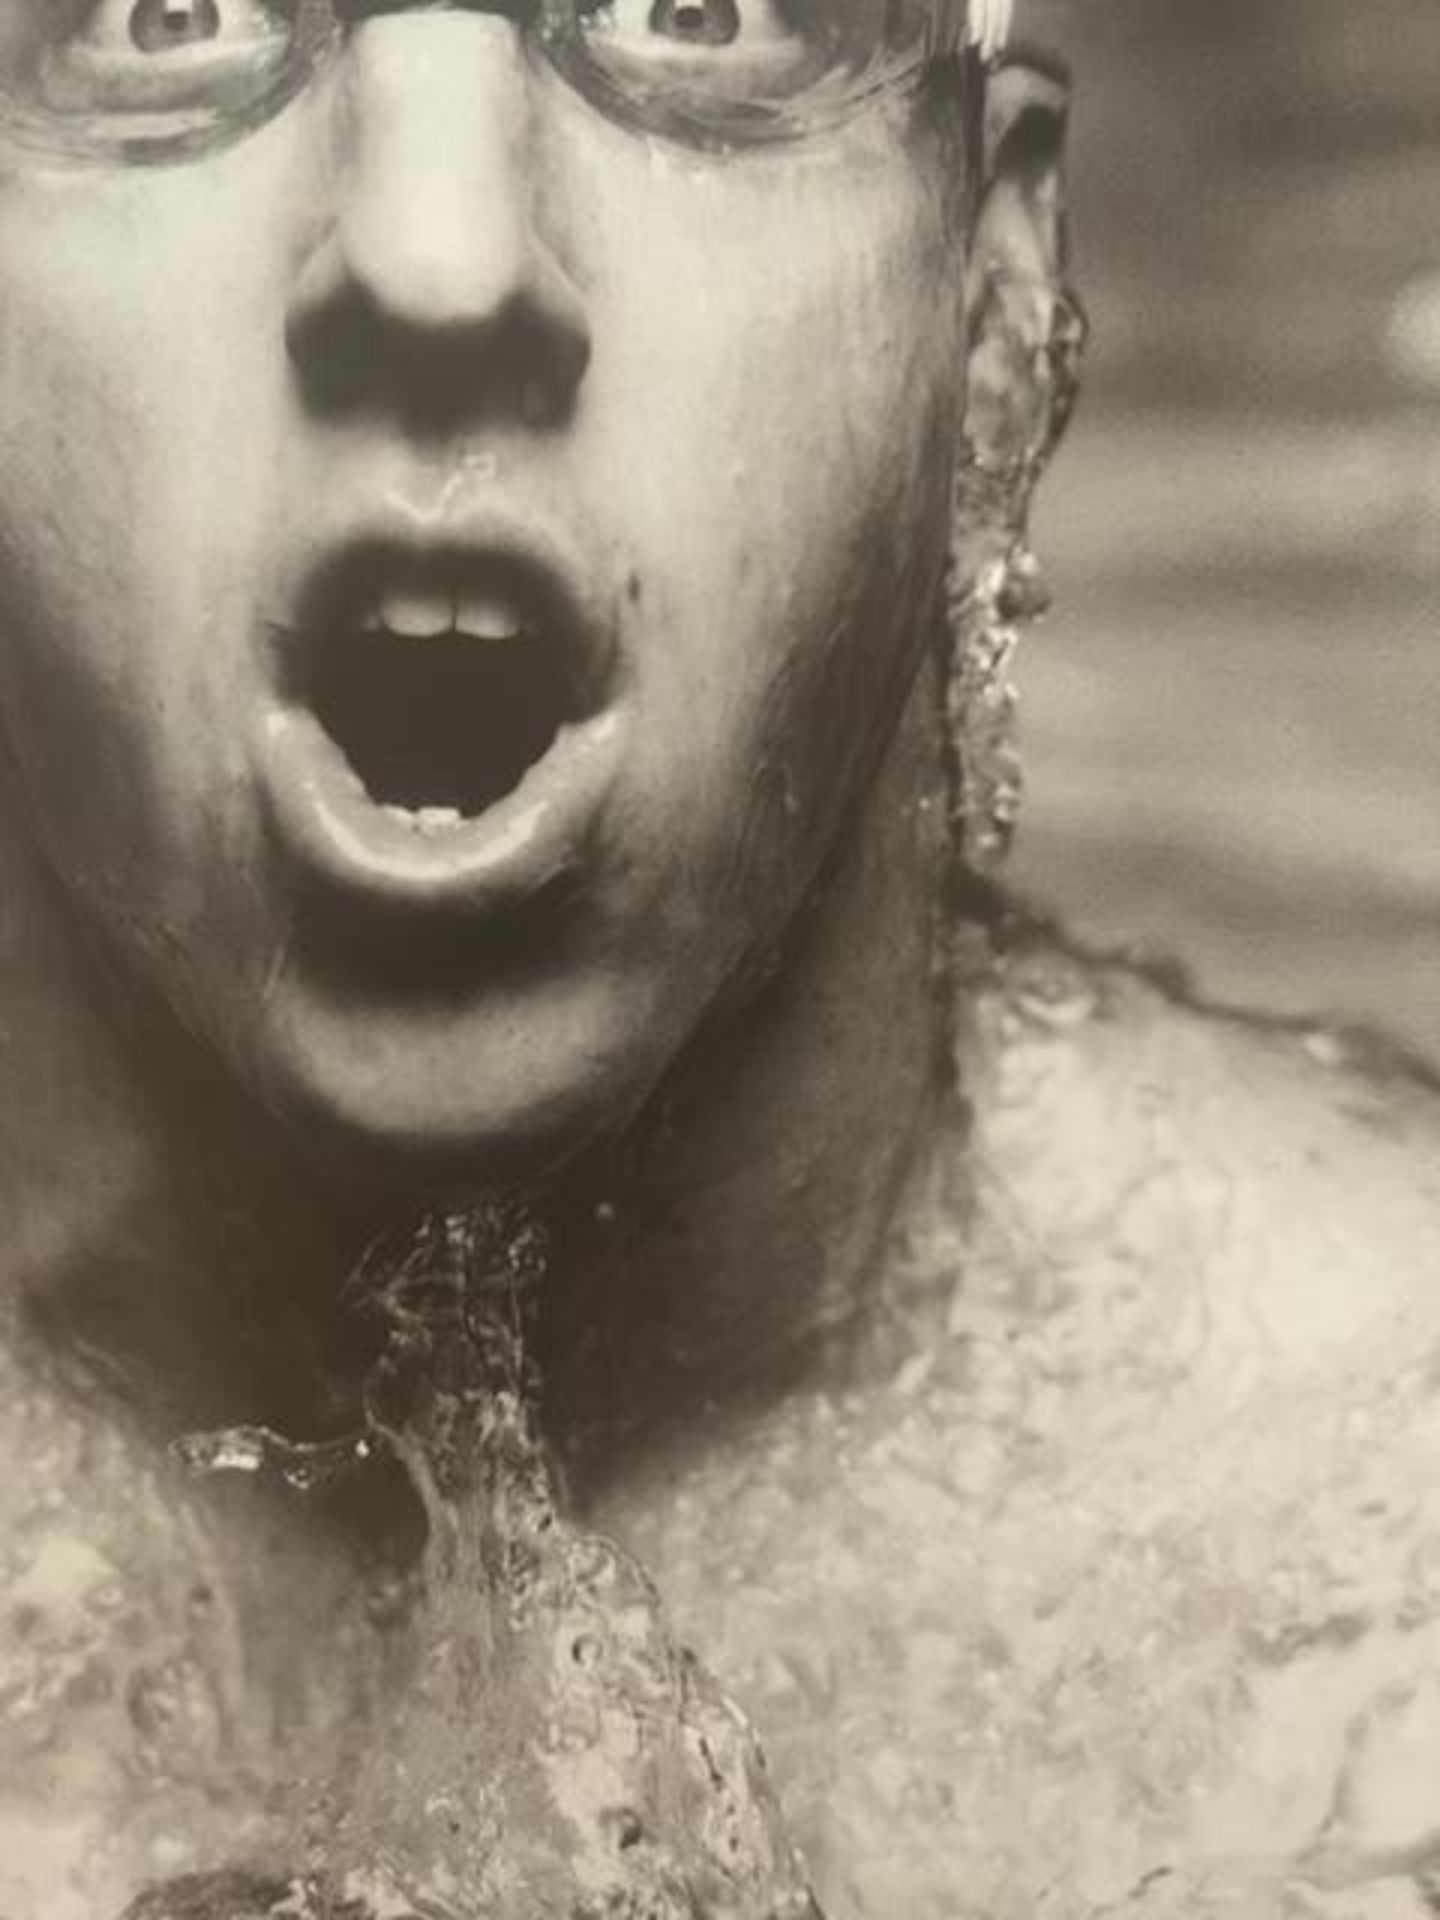 Annie Leibovitz "Untitled" Print. - Image 10 of 10